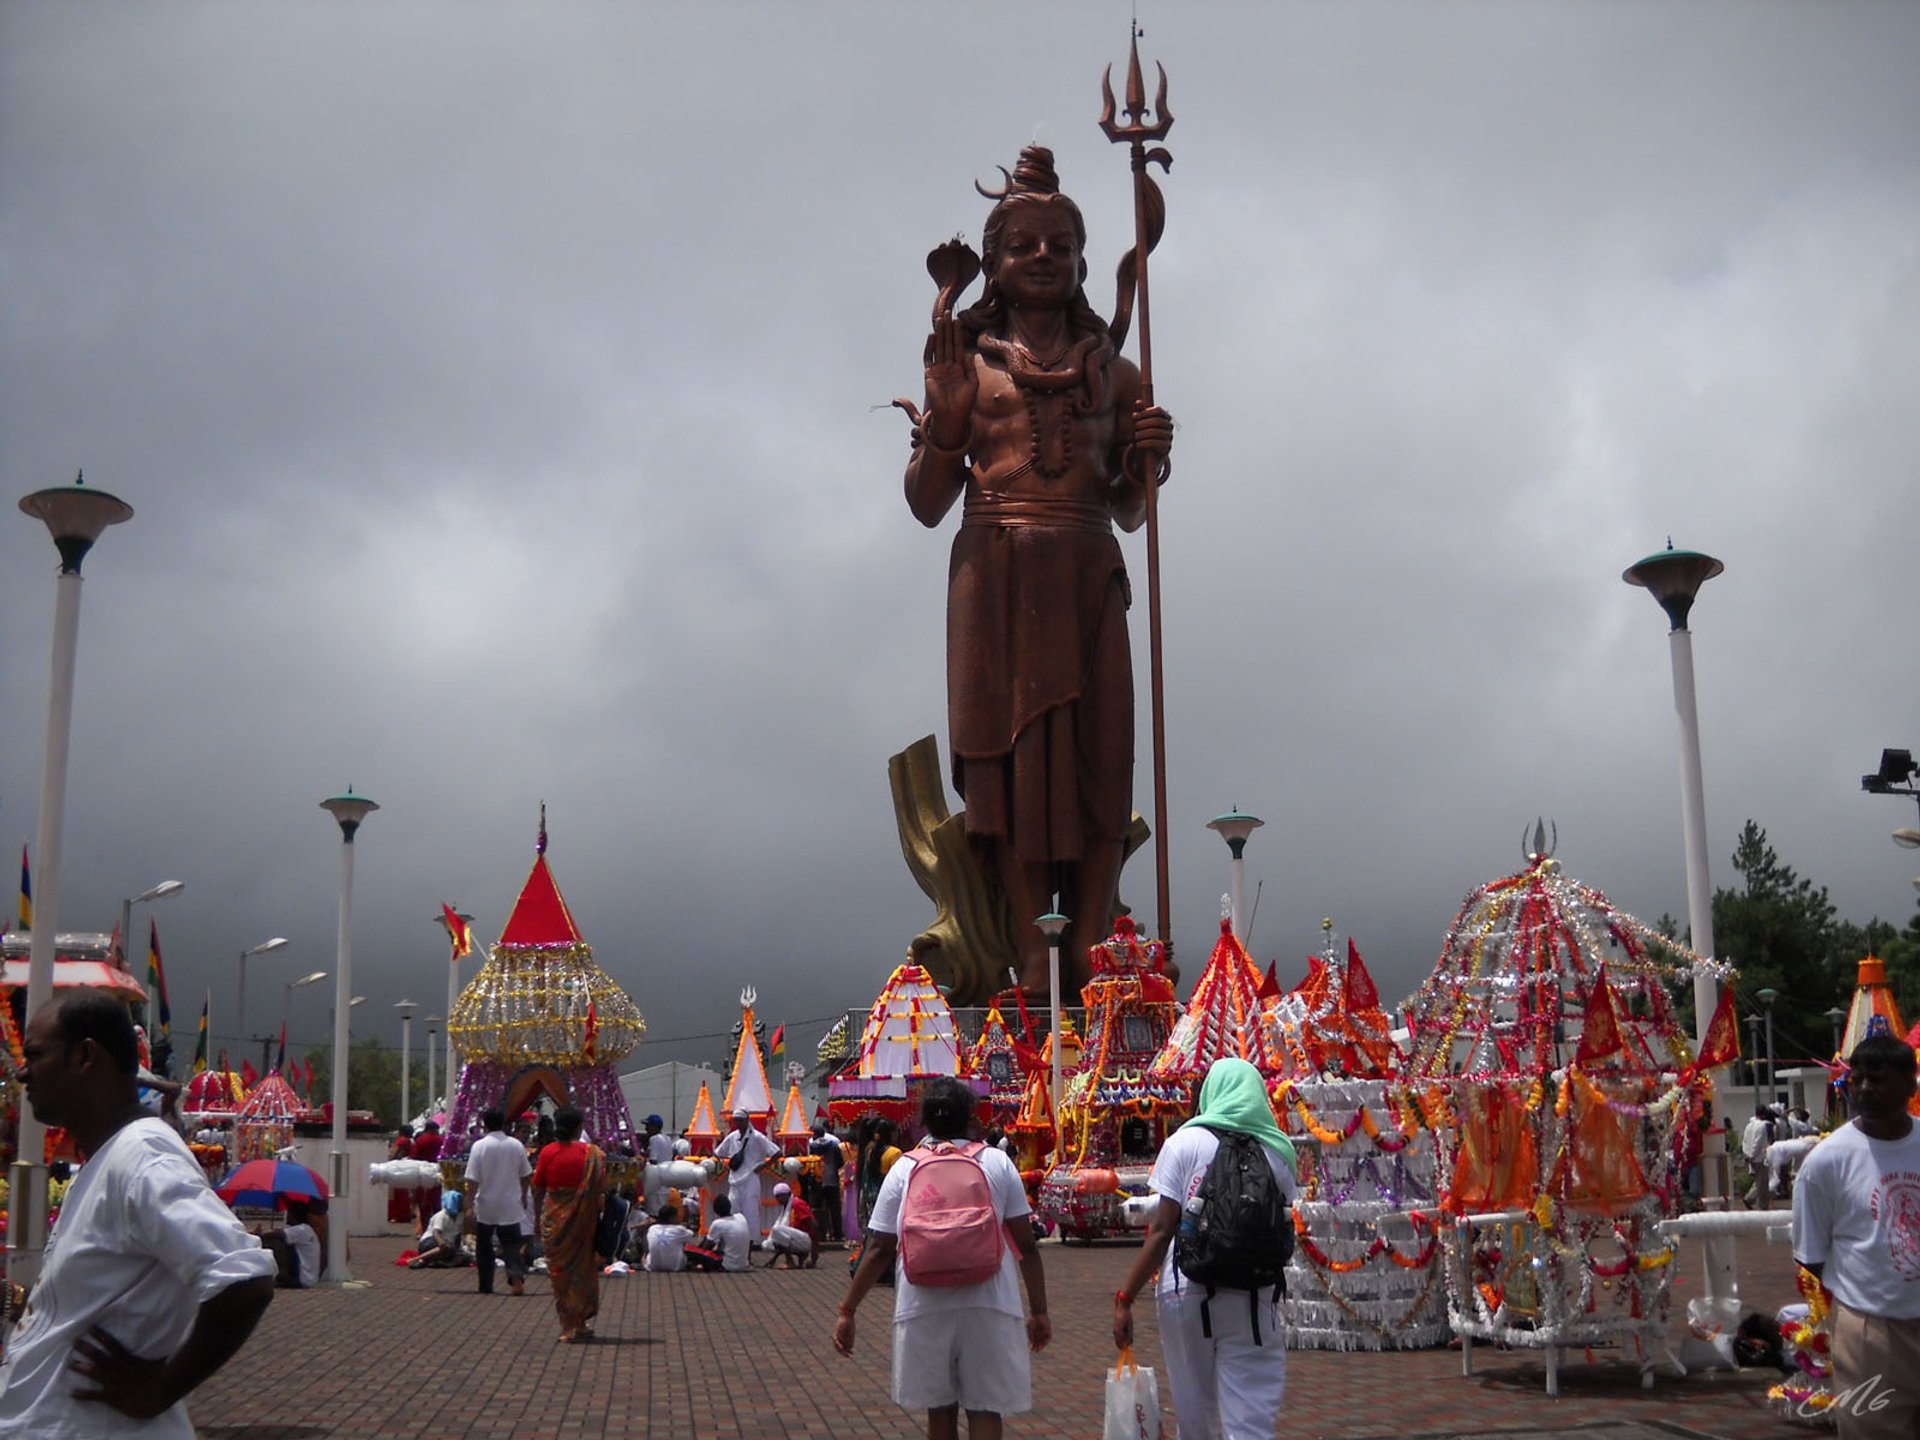 Celebrazione di Maha Shivaratree